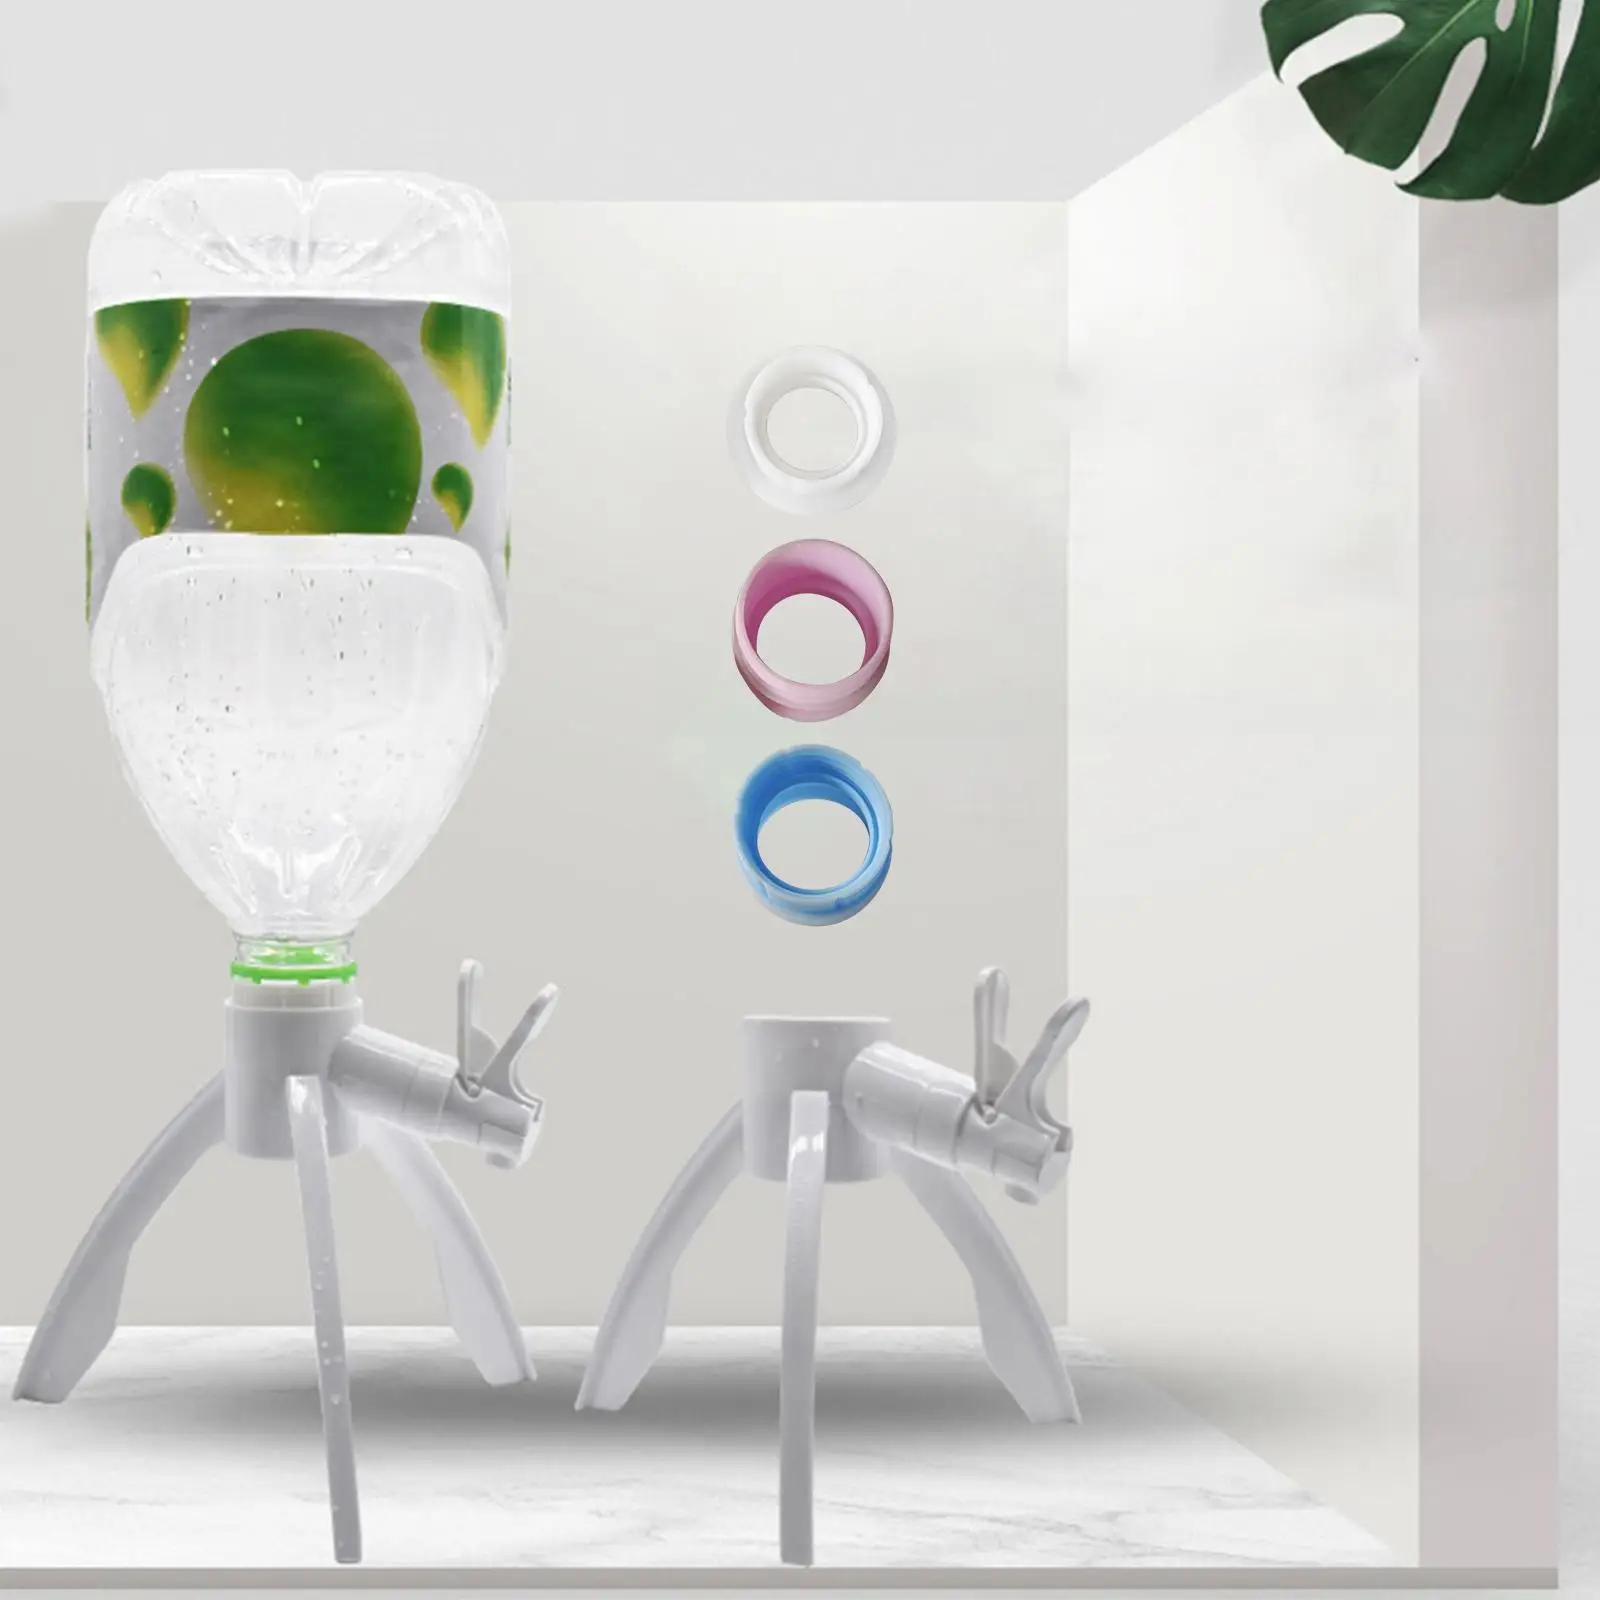 Novelty Drinking Water Dispenser Lightweight Kitchen Gadget for Parties